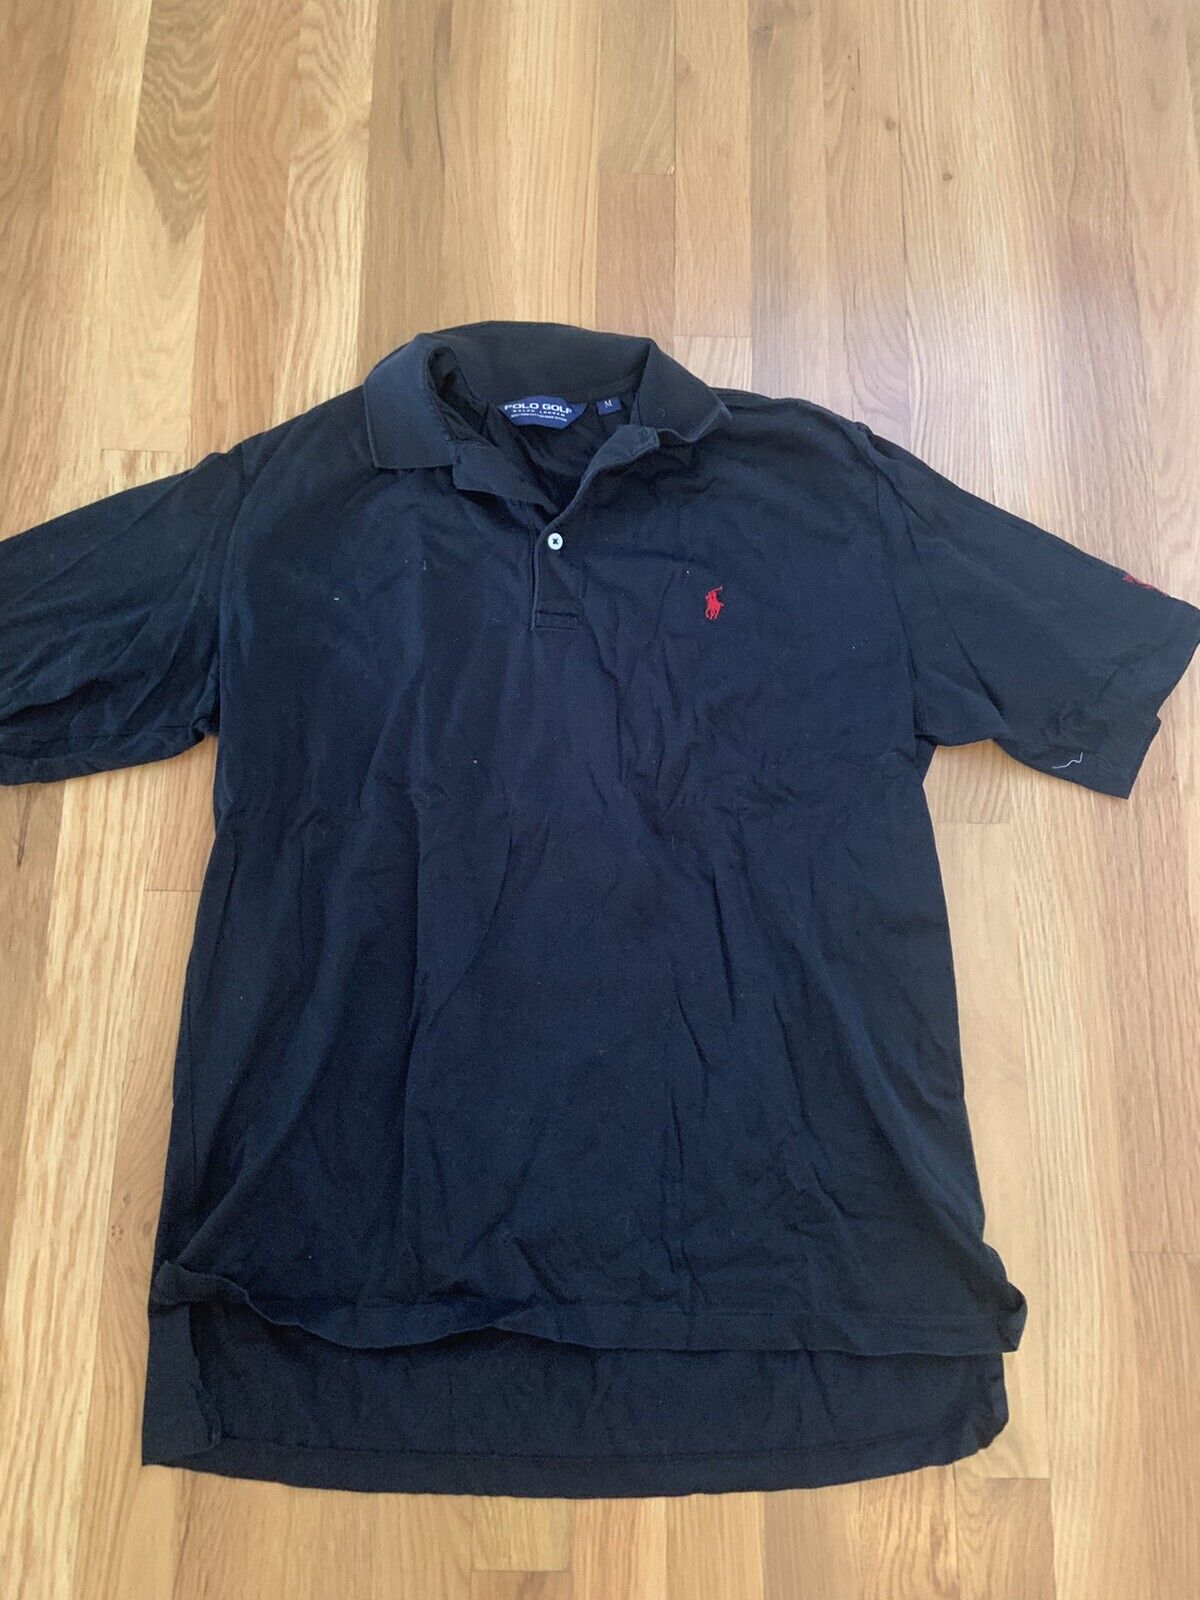 vintage polo golf mens shirt black medium with logo “the diplomat”